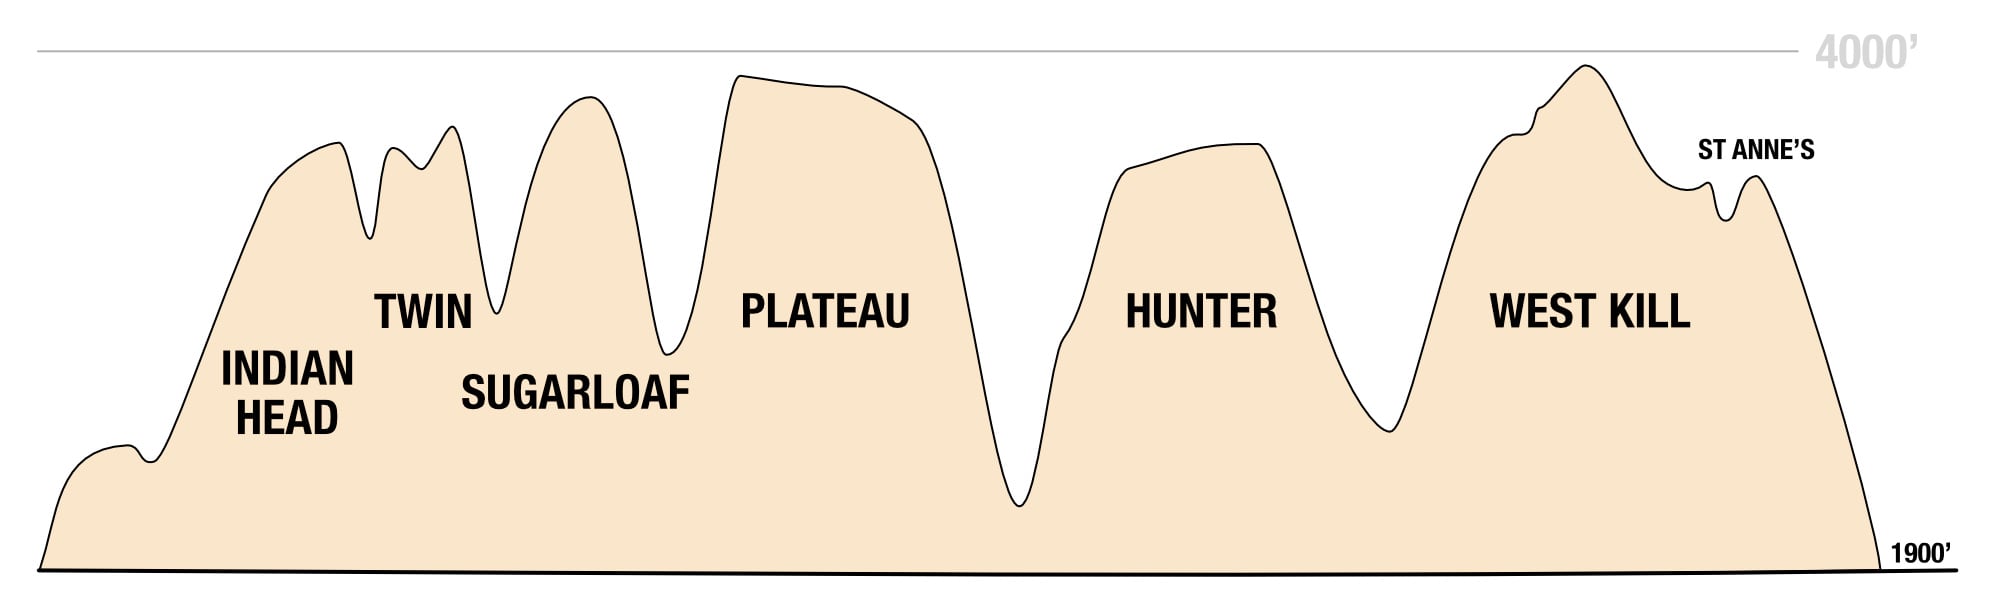 diagram showing elevation profile of Devils path